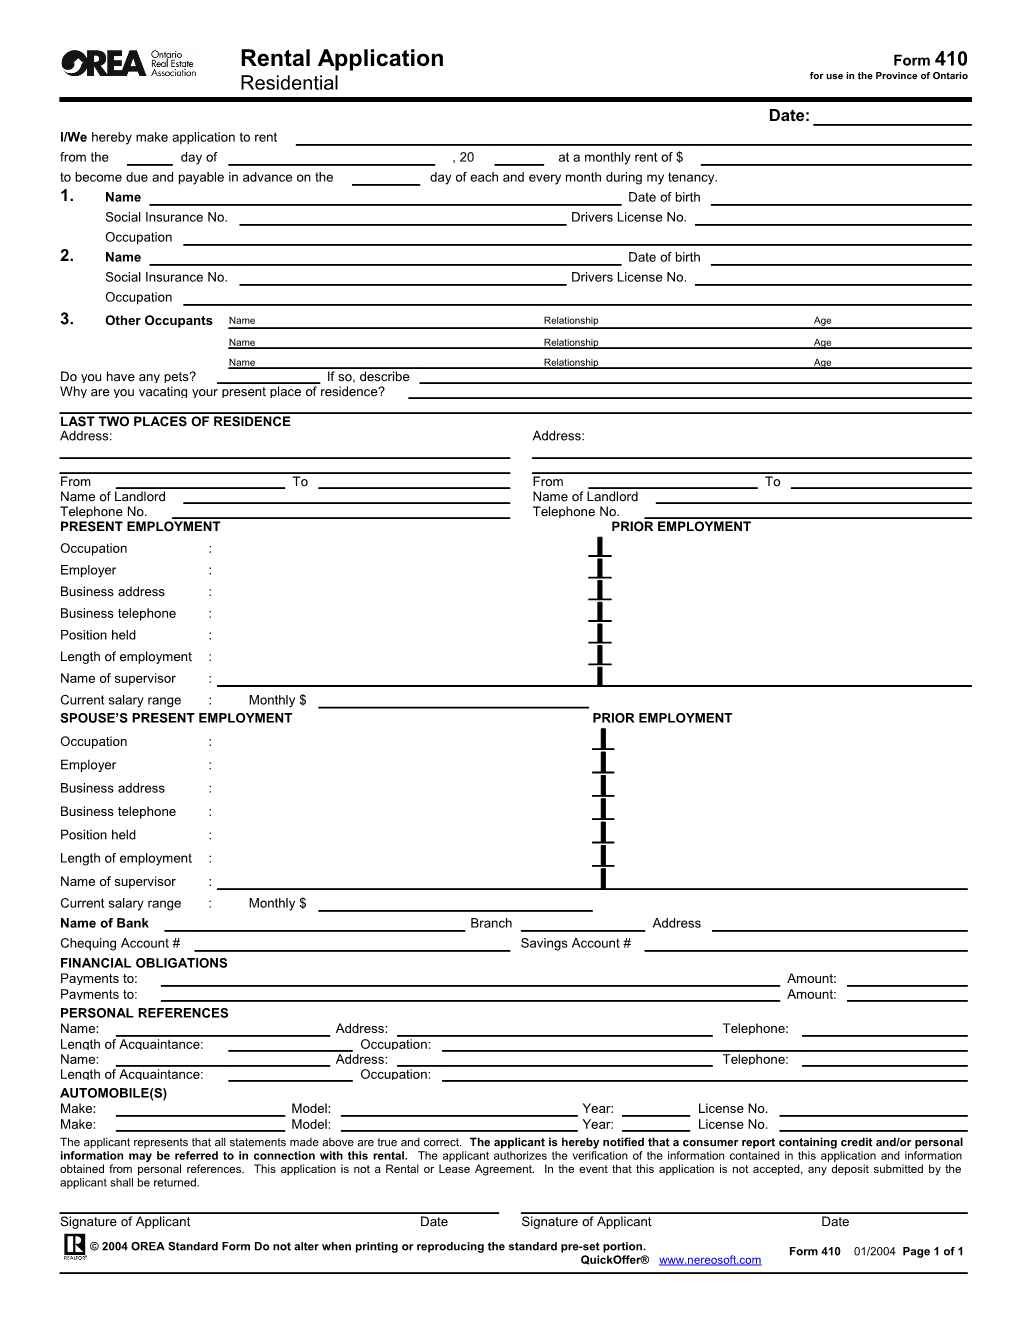 Form 410 - Rental Application